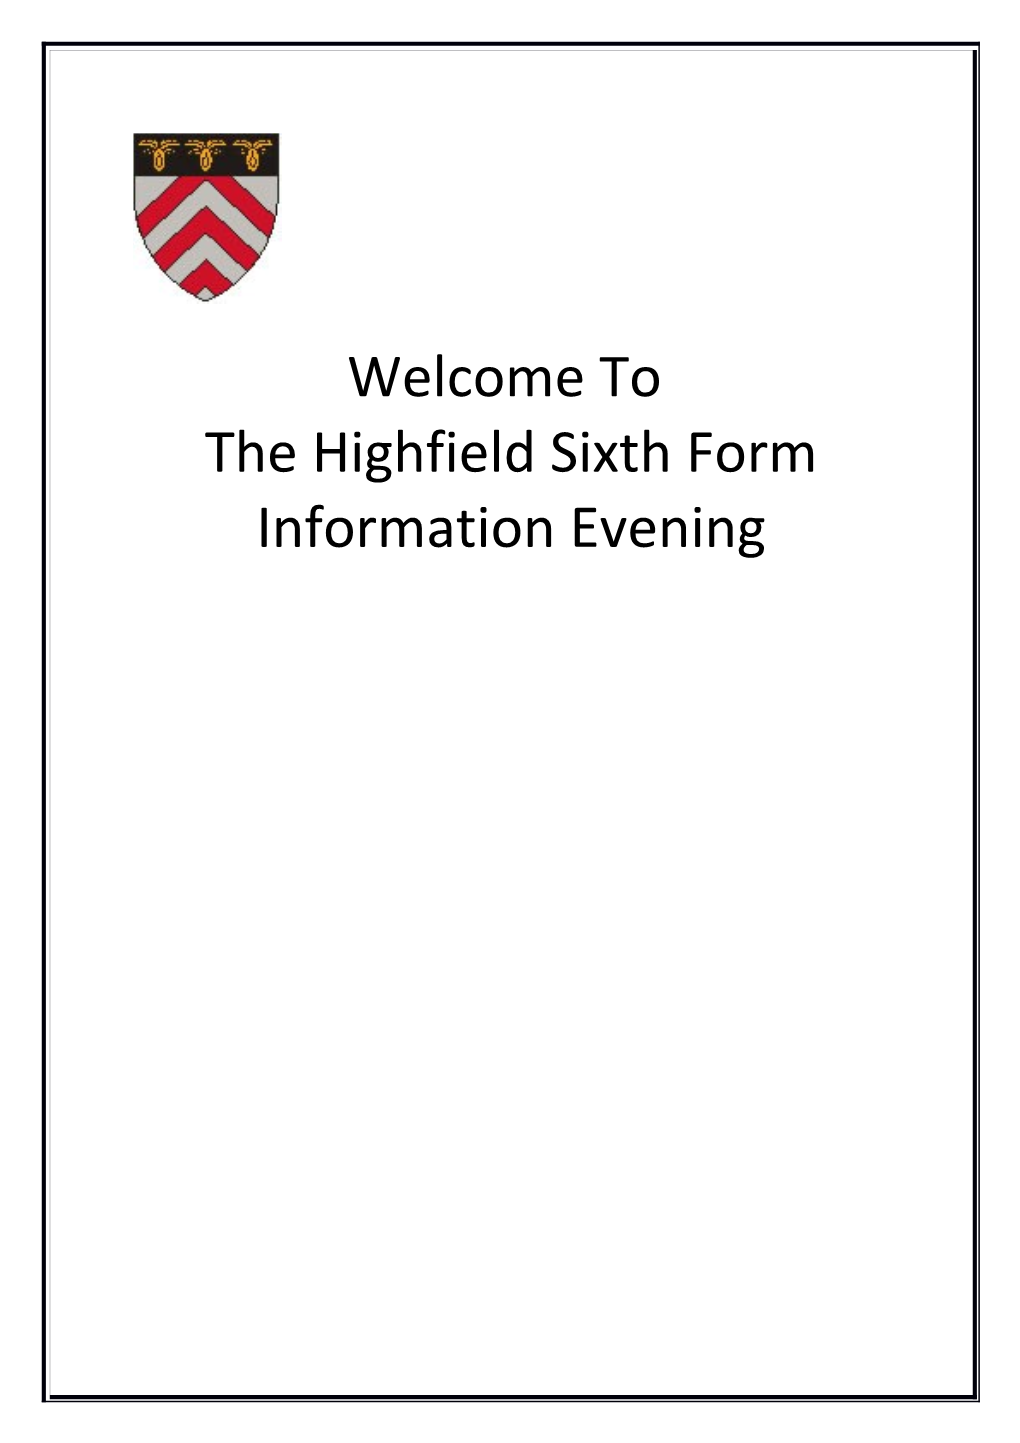 Thehighfield Sixth Form